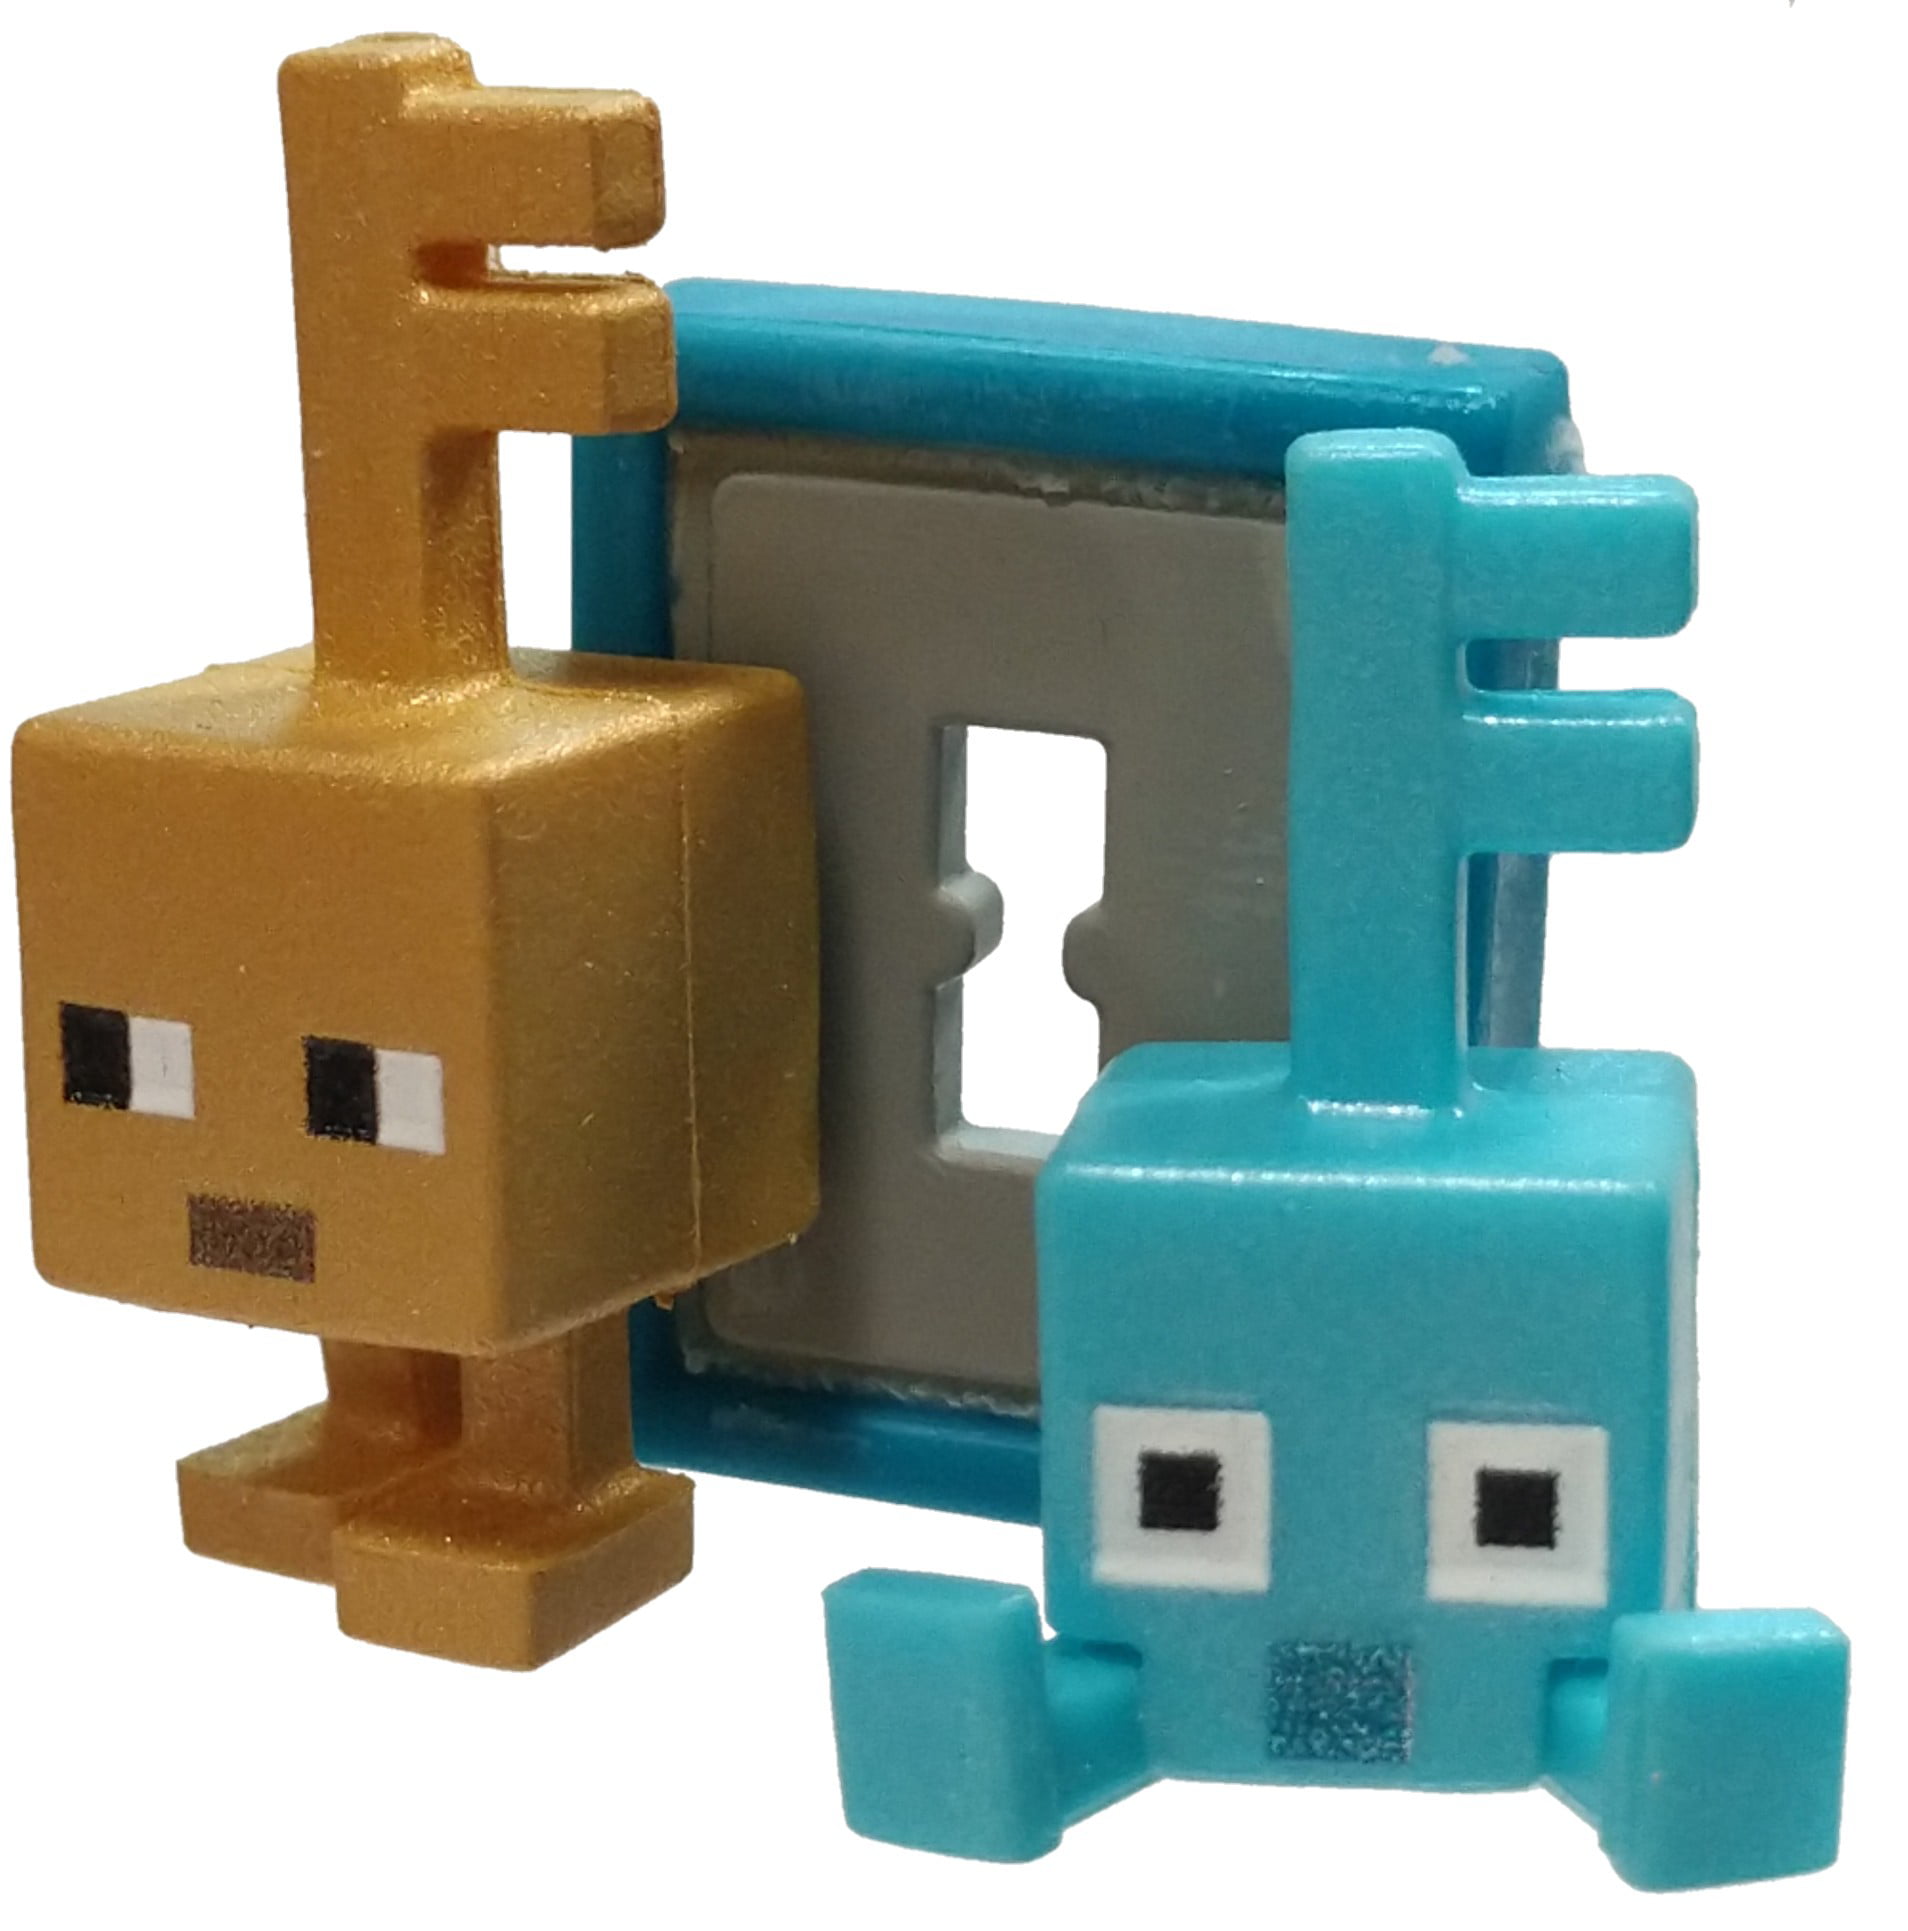 Minecraft Dungeon Series 20 Mini Figures Key Golems NEW 